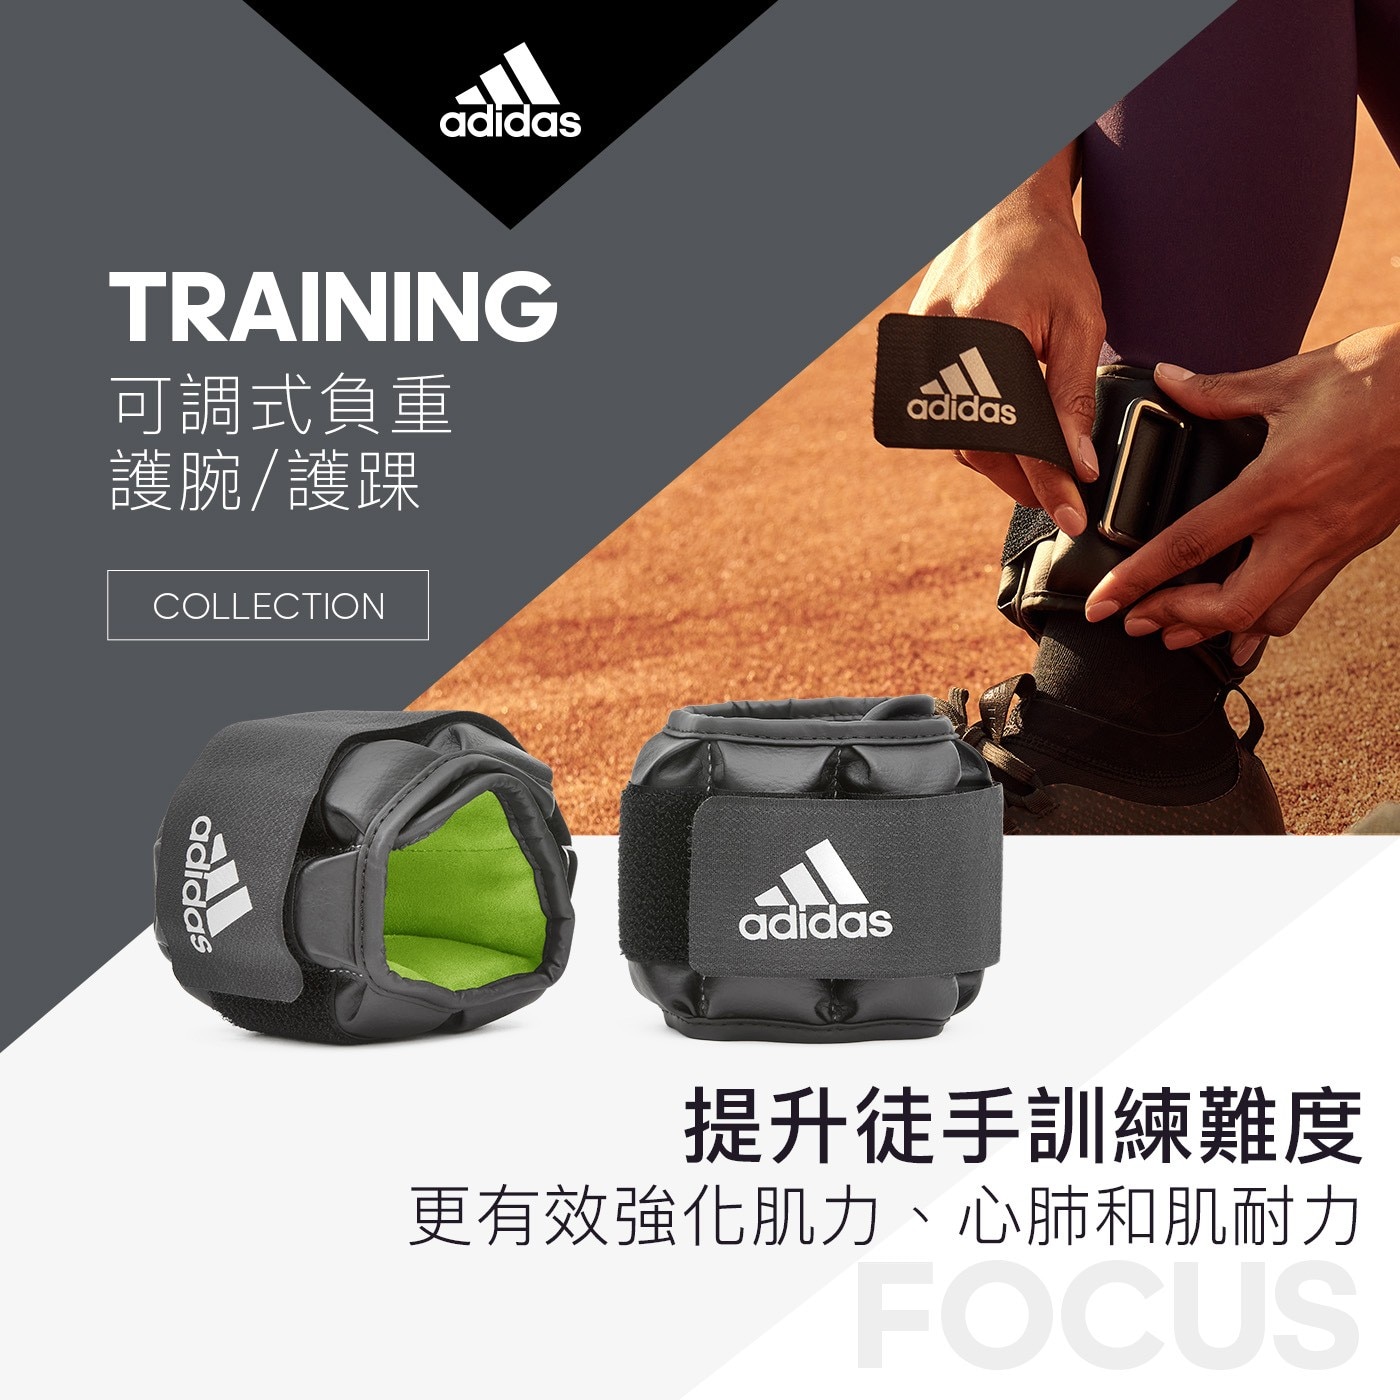 Adidas 可調式負重護腕/護踝 2公斤 X 2入可自由調整長度，適用所有身形提升徒手訓練難度更有效強化肌力心肺和肌耐力